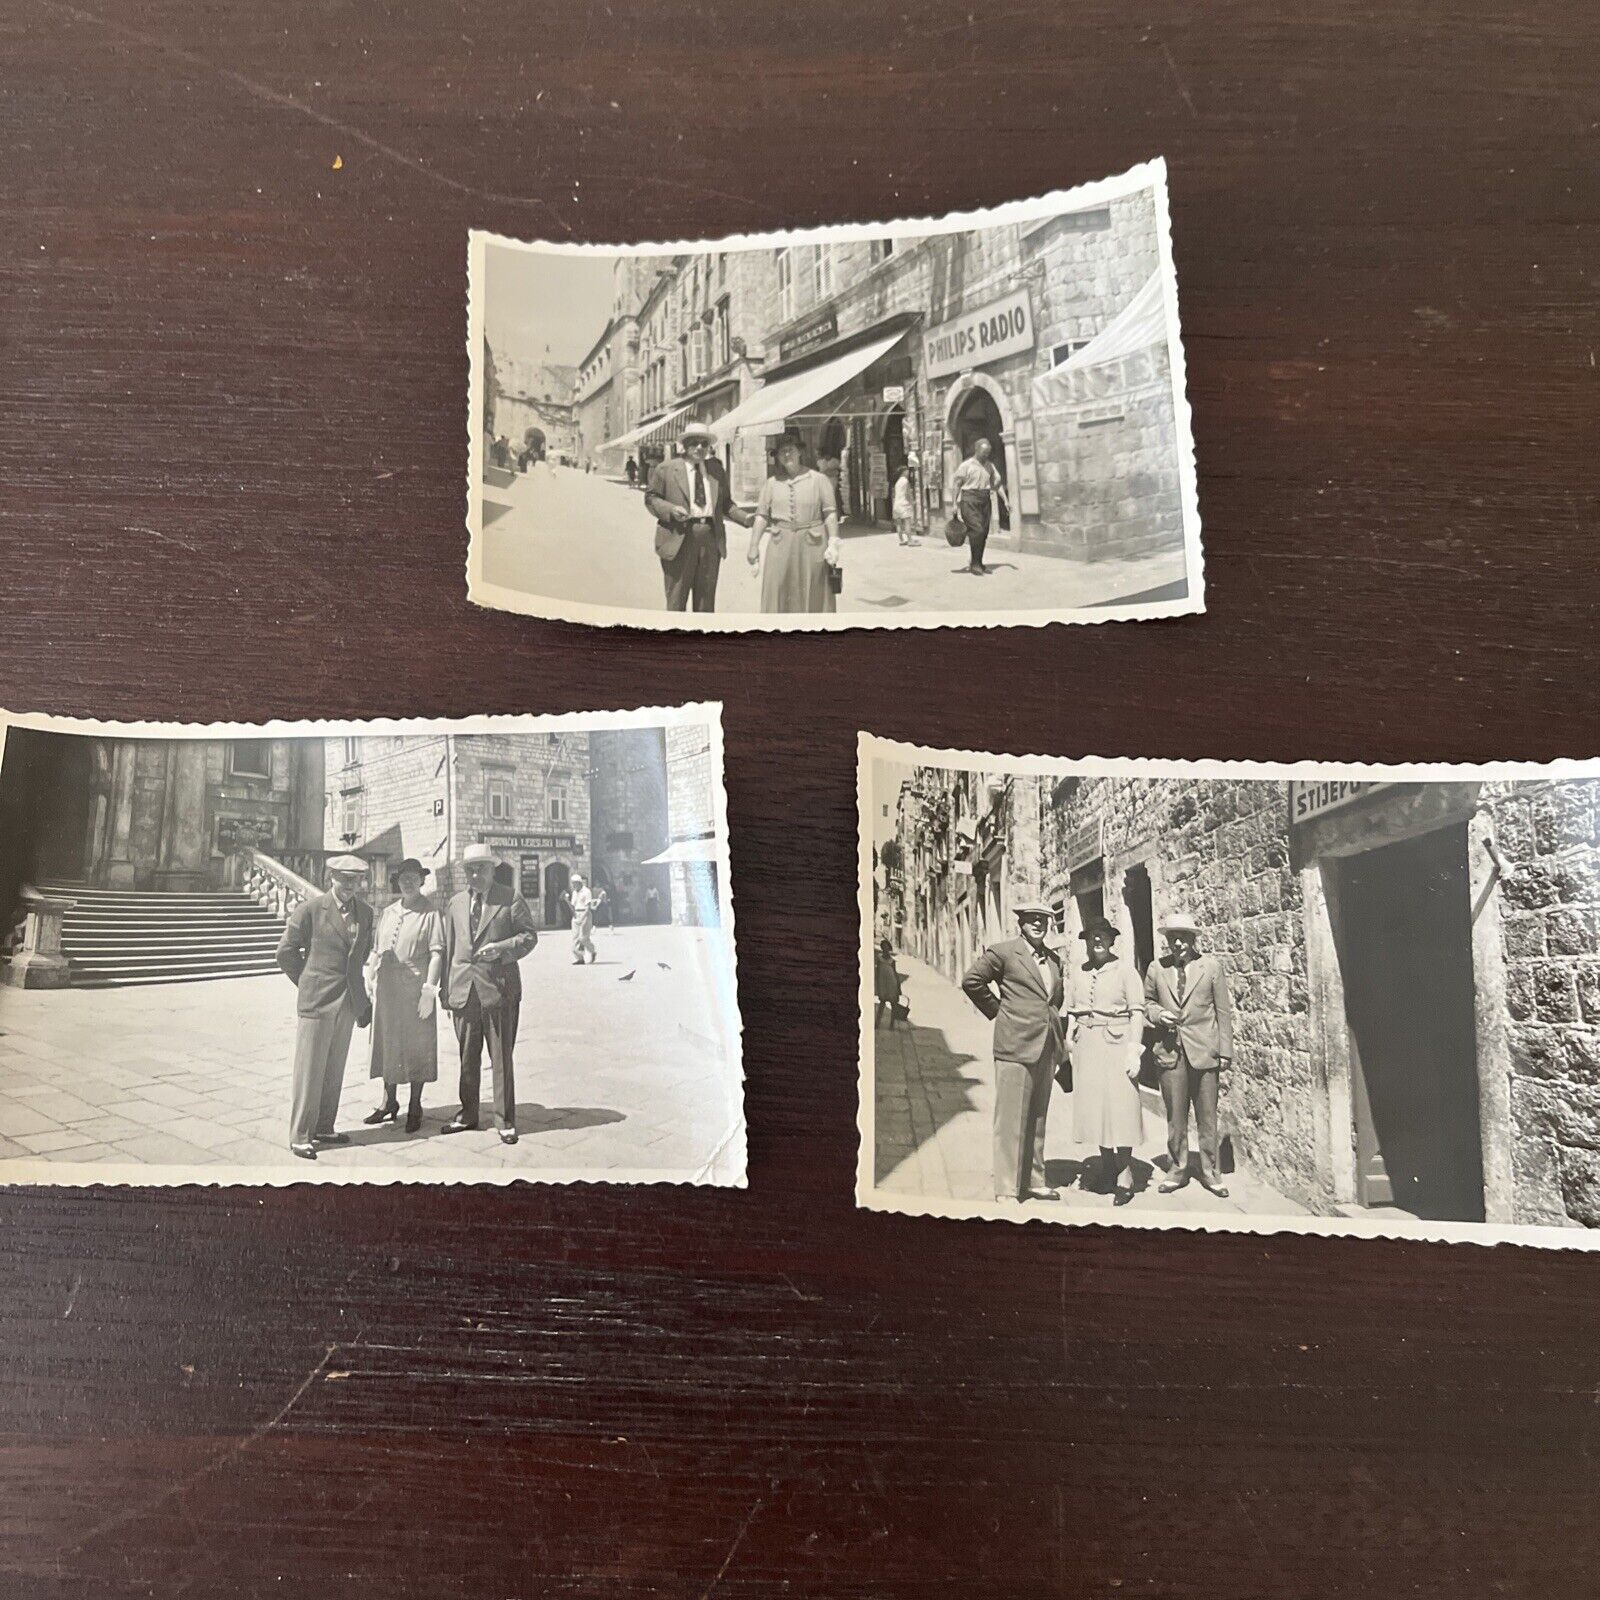 Vtg 1937 Vacation Photos Of Ragusa, Yugoslavia, Drugstore, Street Scenes, 3 Pics